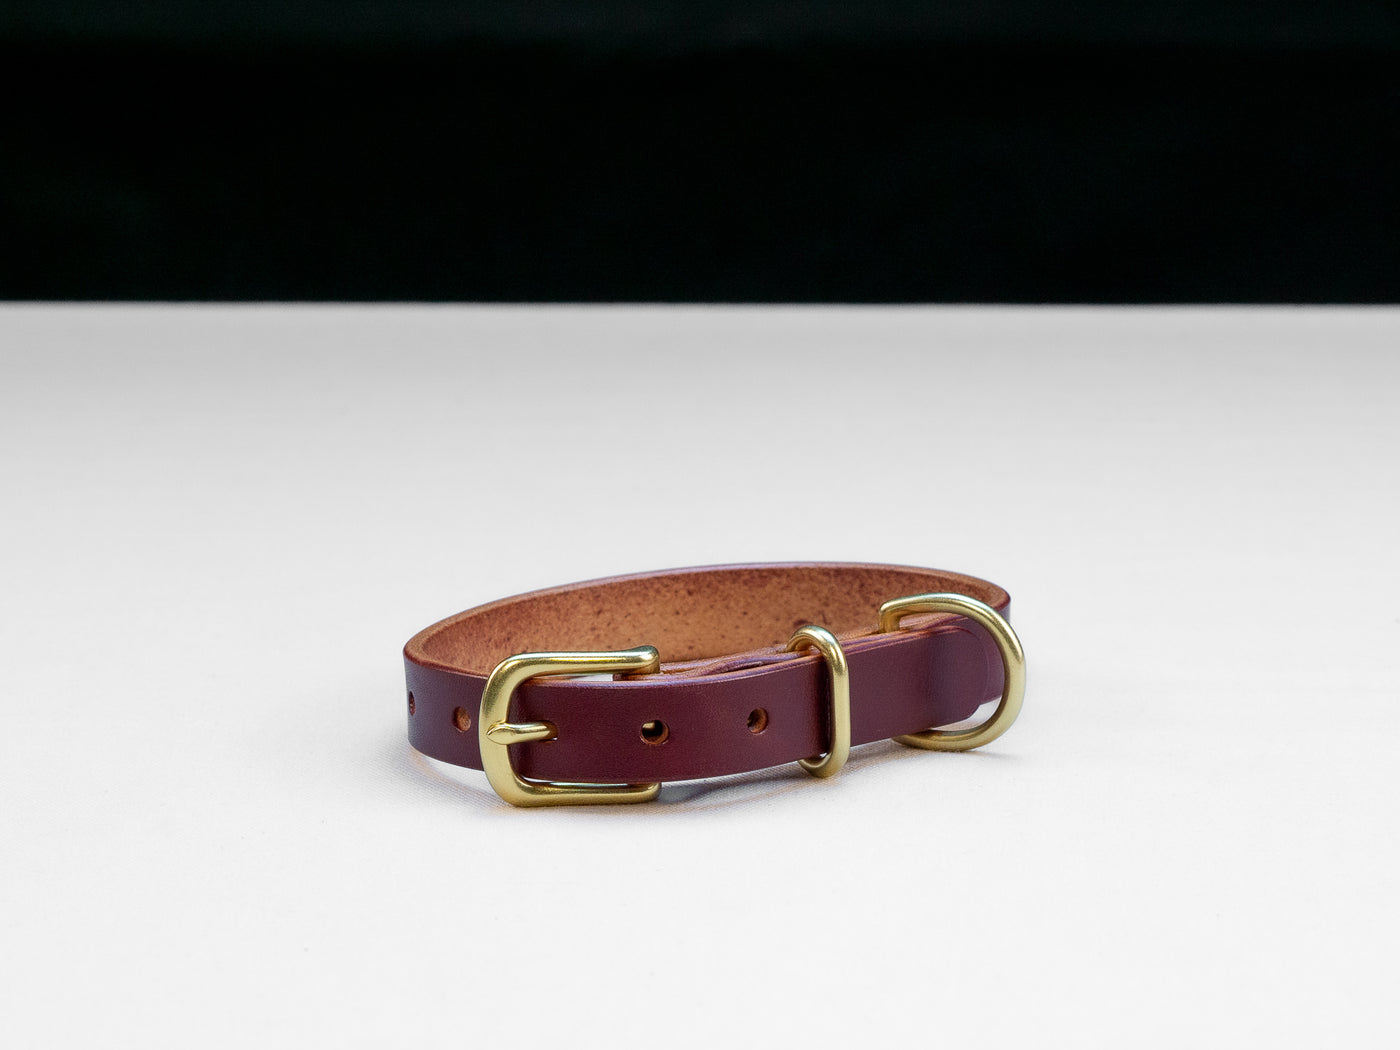 Leather Belt Dog Collar - Burgundy English Bridle Leather - Atlas Leathercraft - Handmade Australian Leather Goods